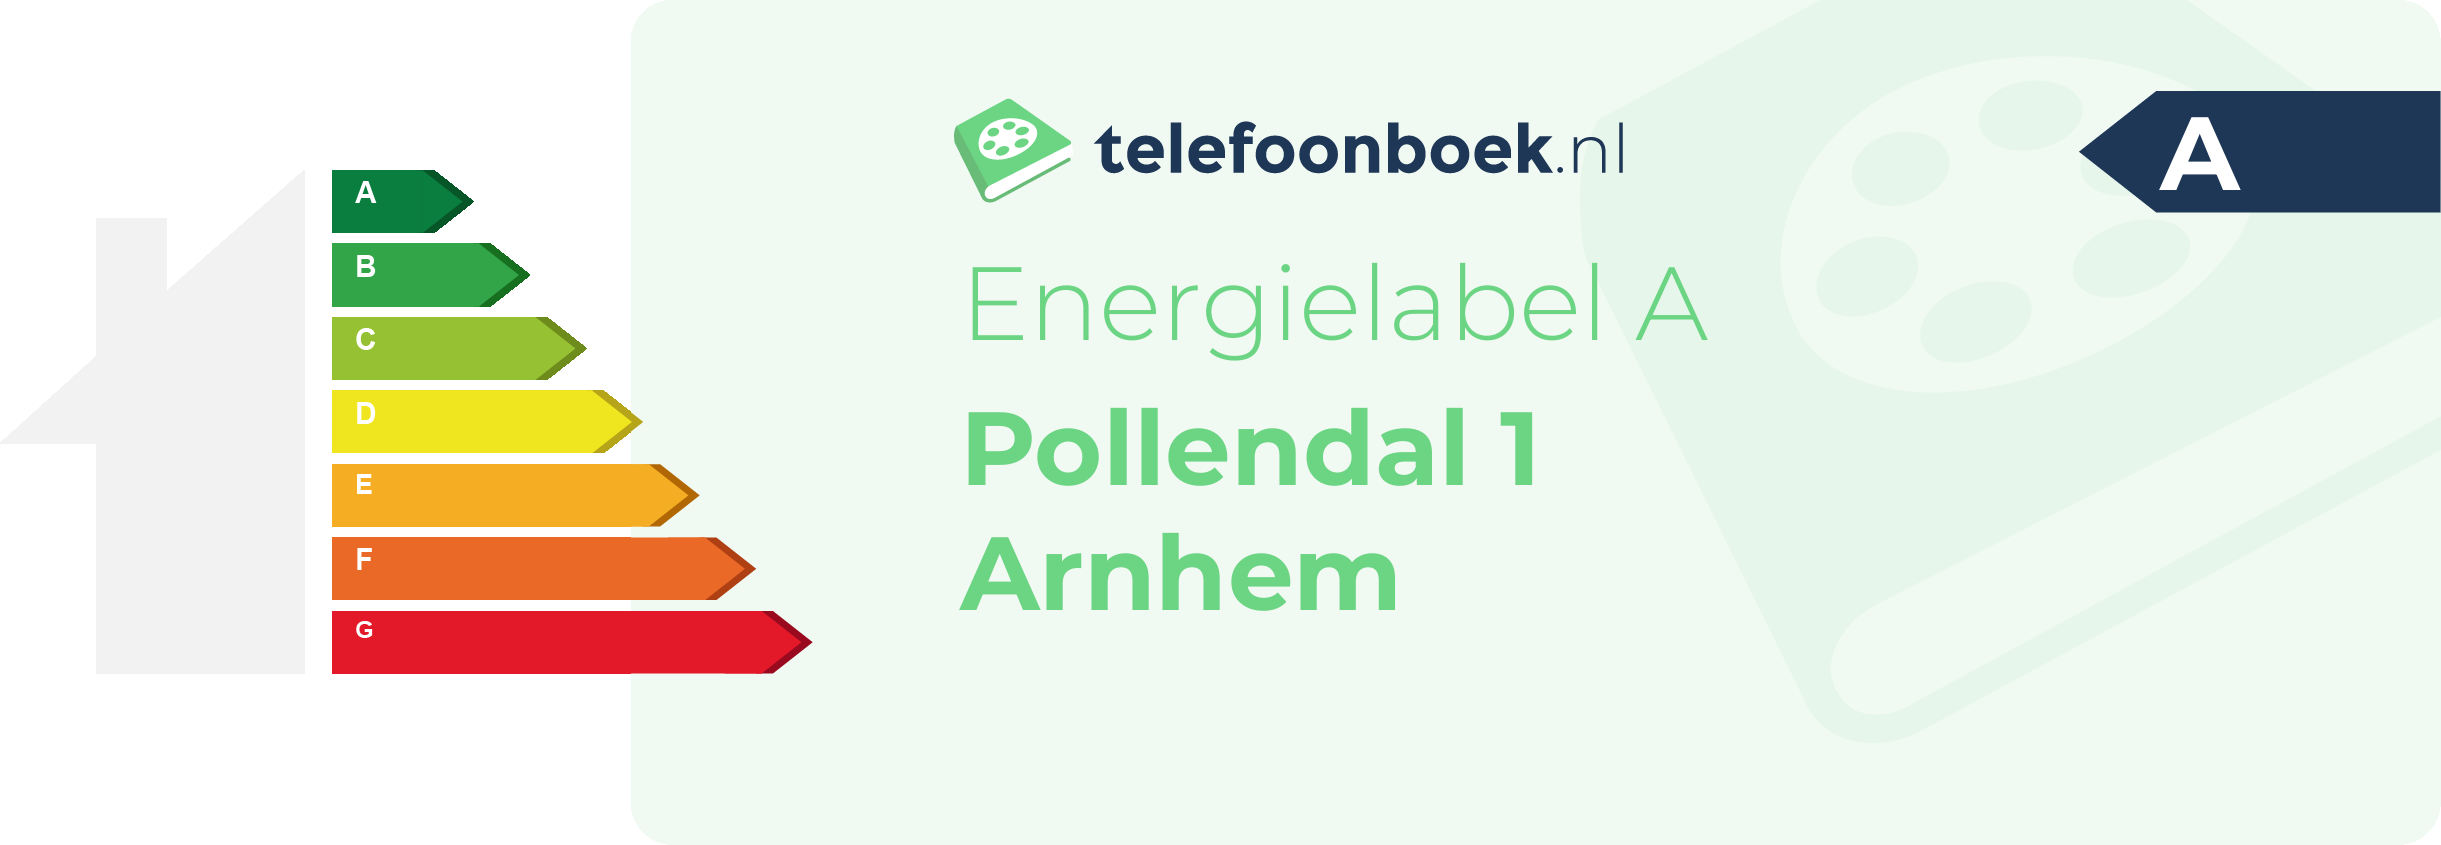 Energielabel Pollendal 1 Arnhem